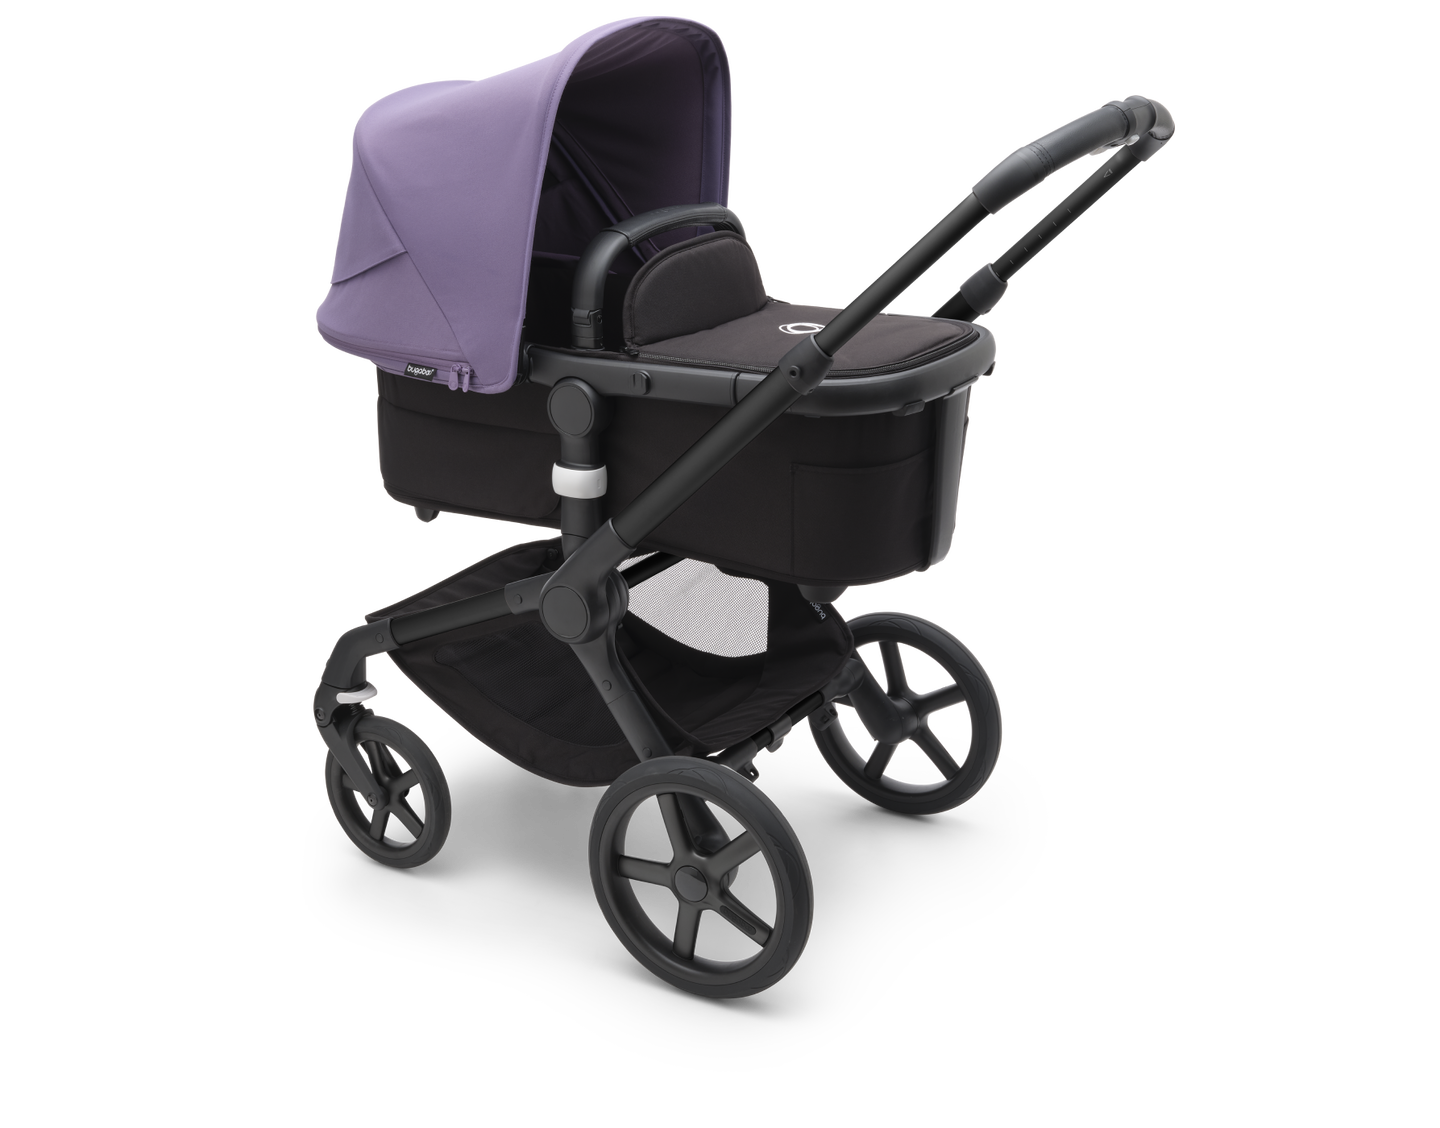 A Bugaboo Fox 5 all-terrain newborn stroller with Astro Purple sun canopy.